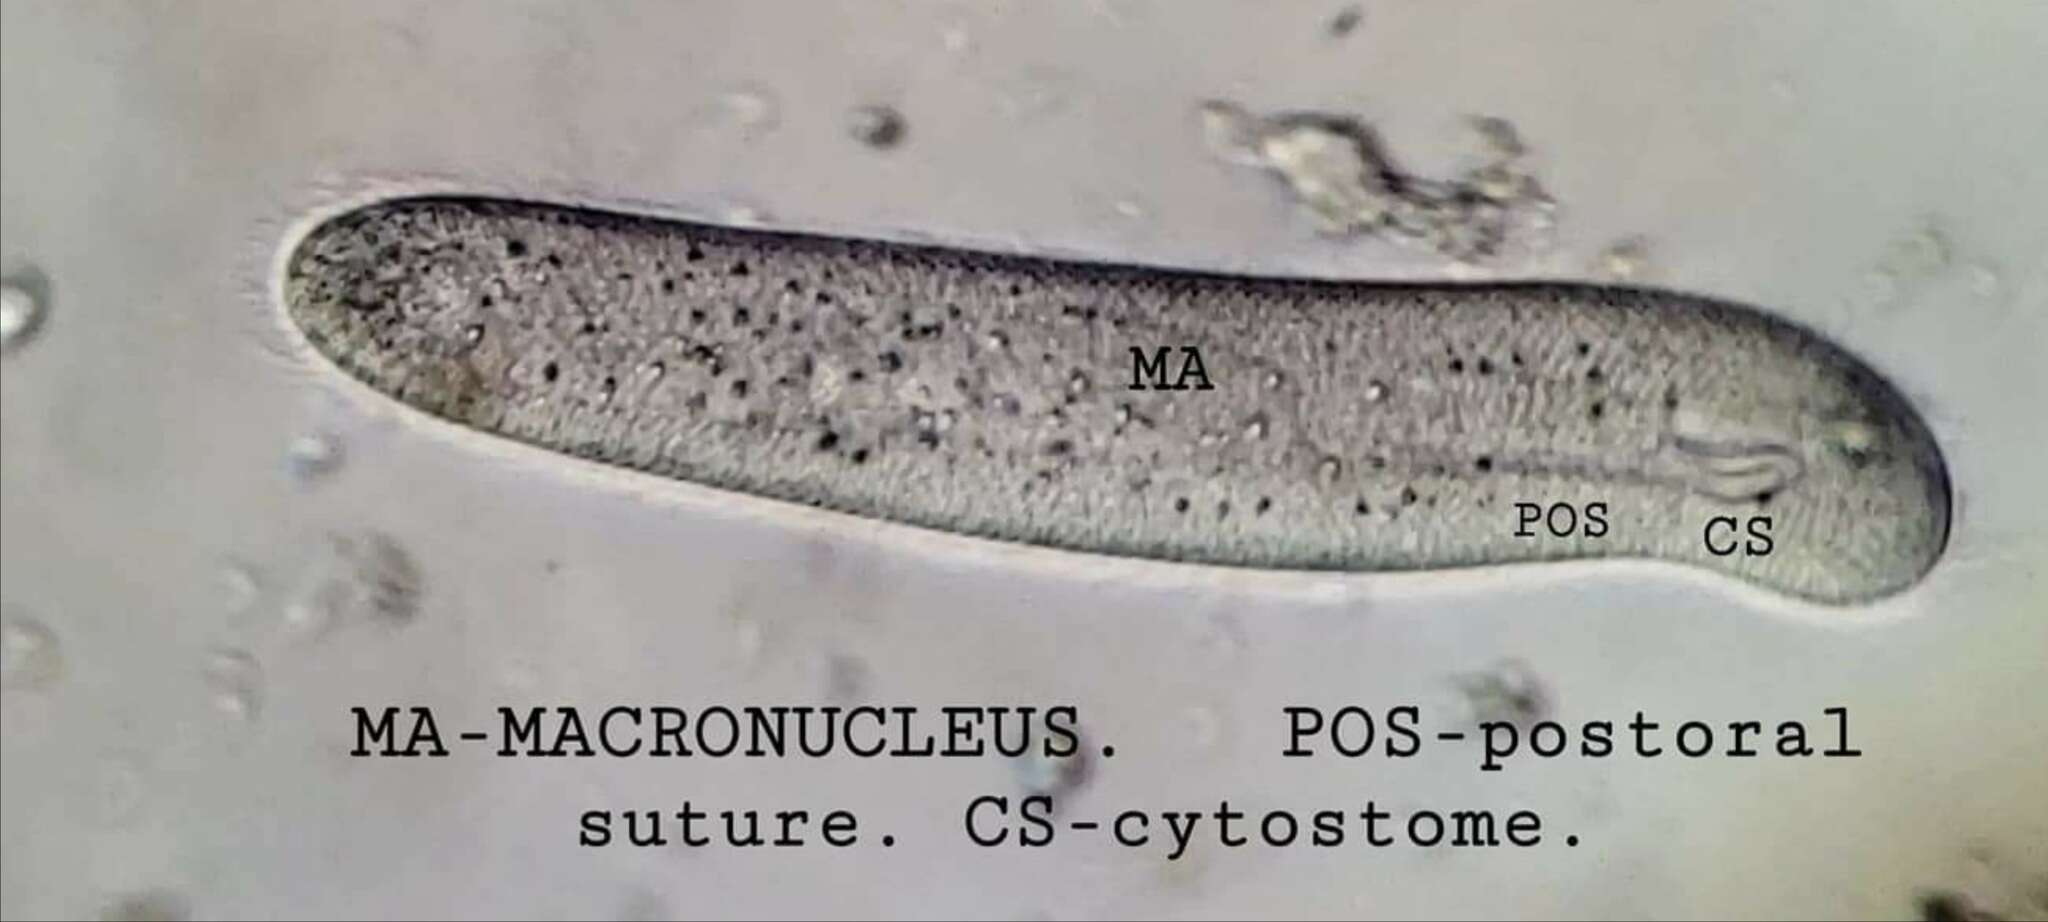 Image of Cardiostomatella mononucleata Dragesco 1960